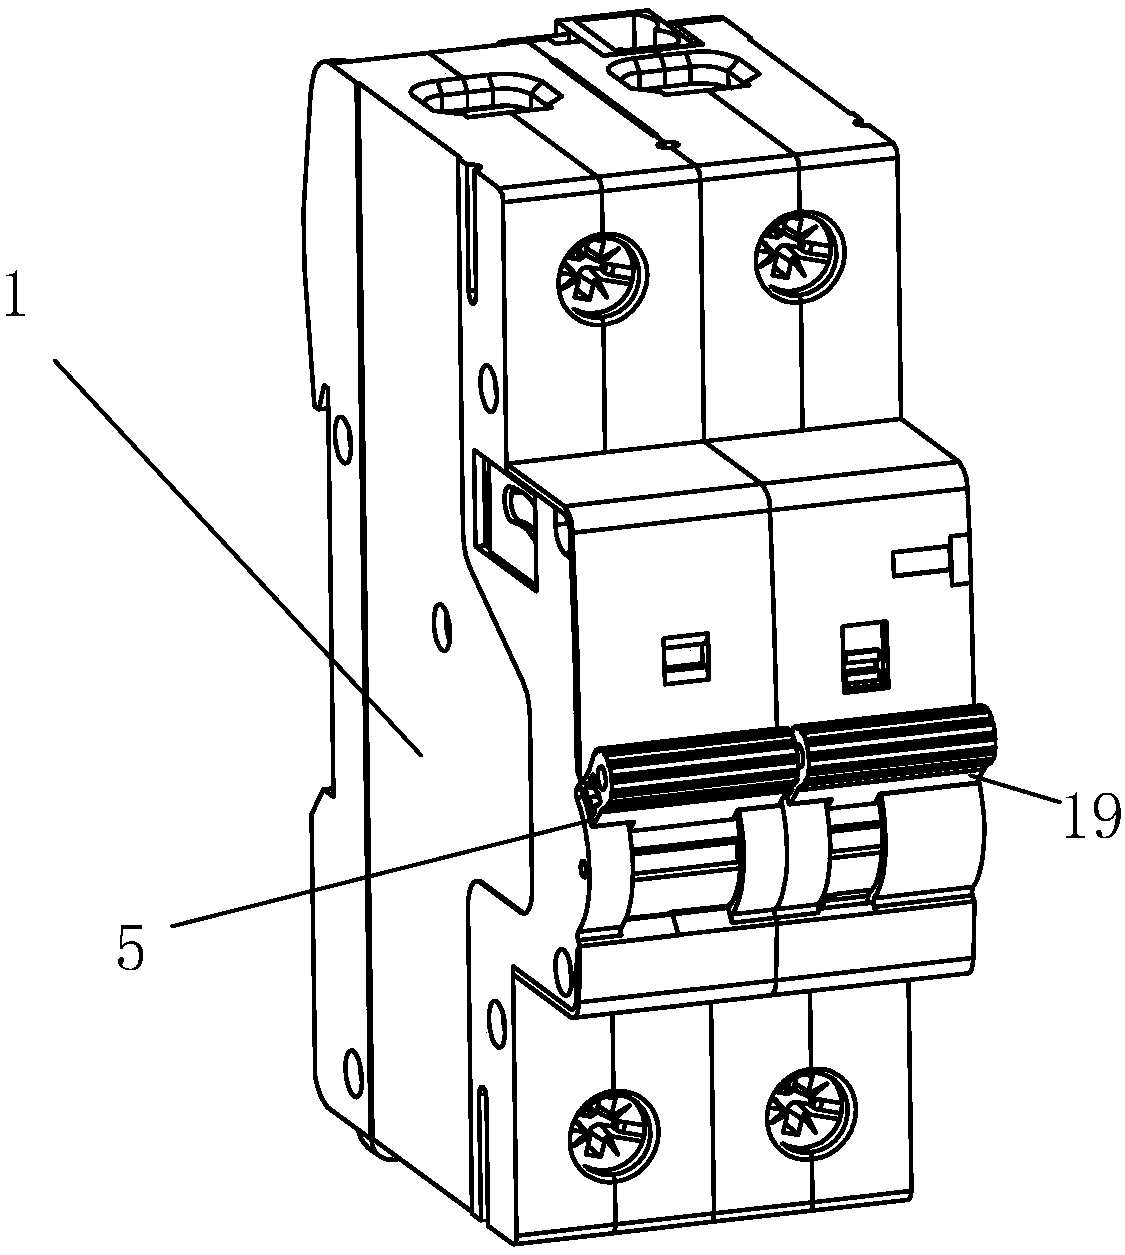 Circuit breaker of integrated electric operating mechanism